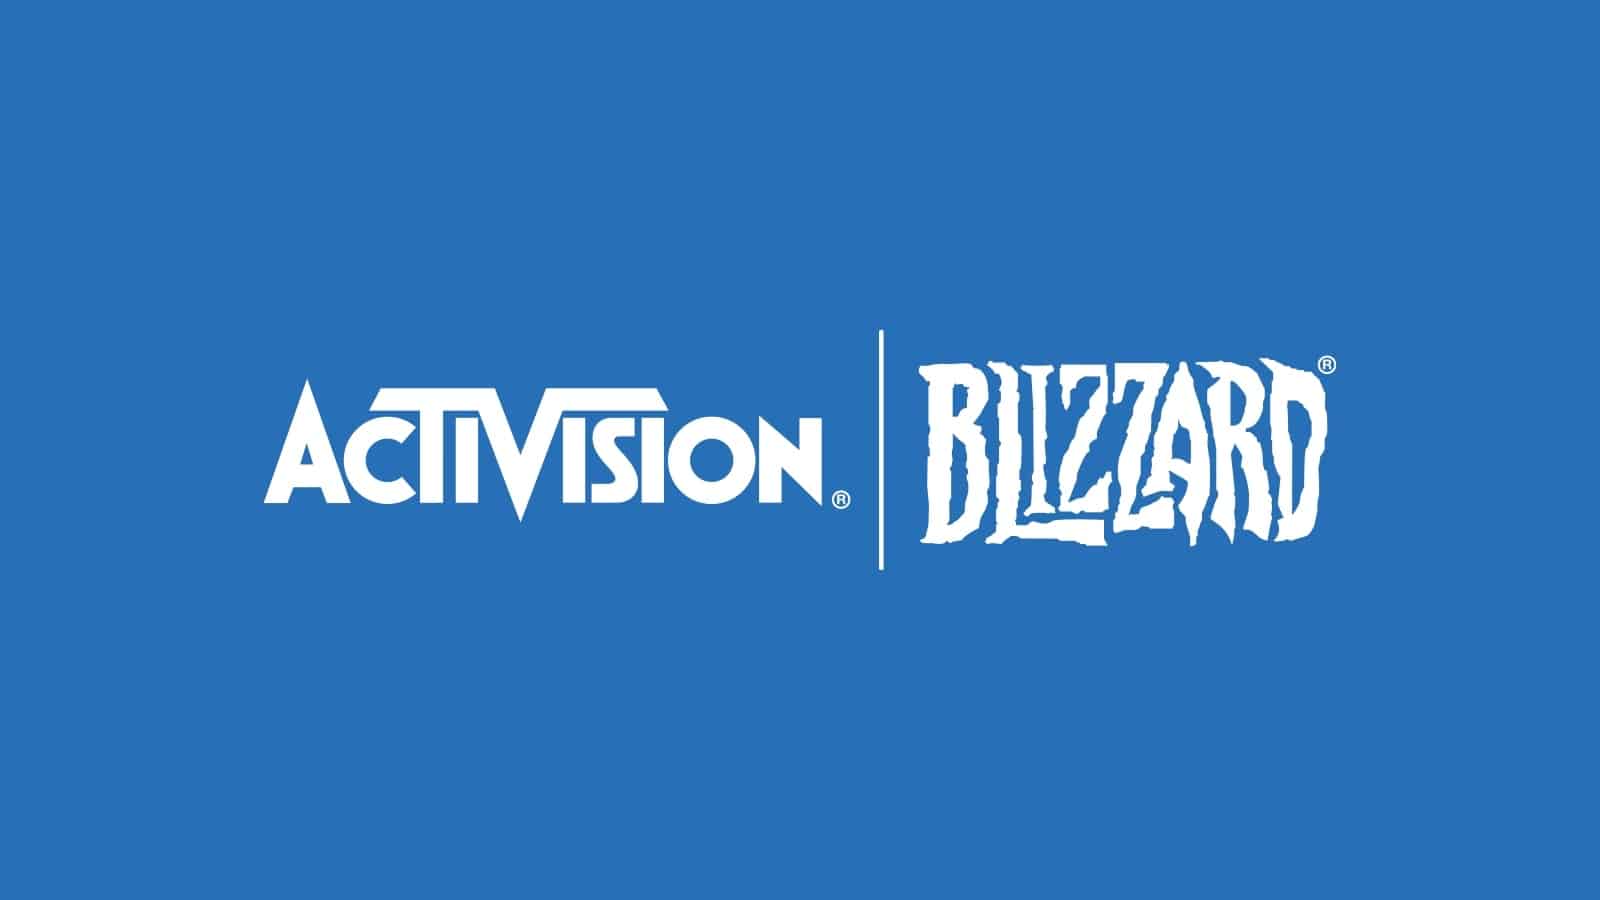 activision blizzard logo